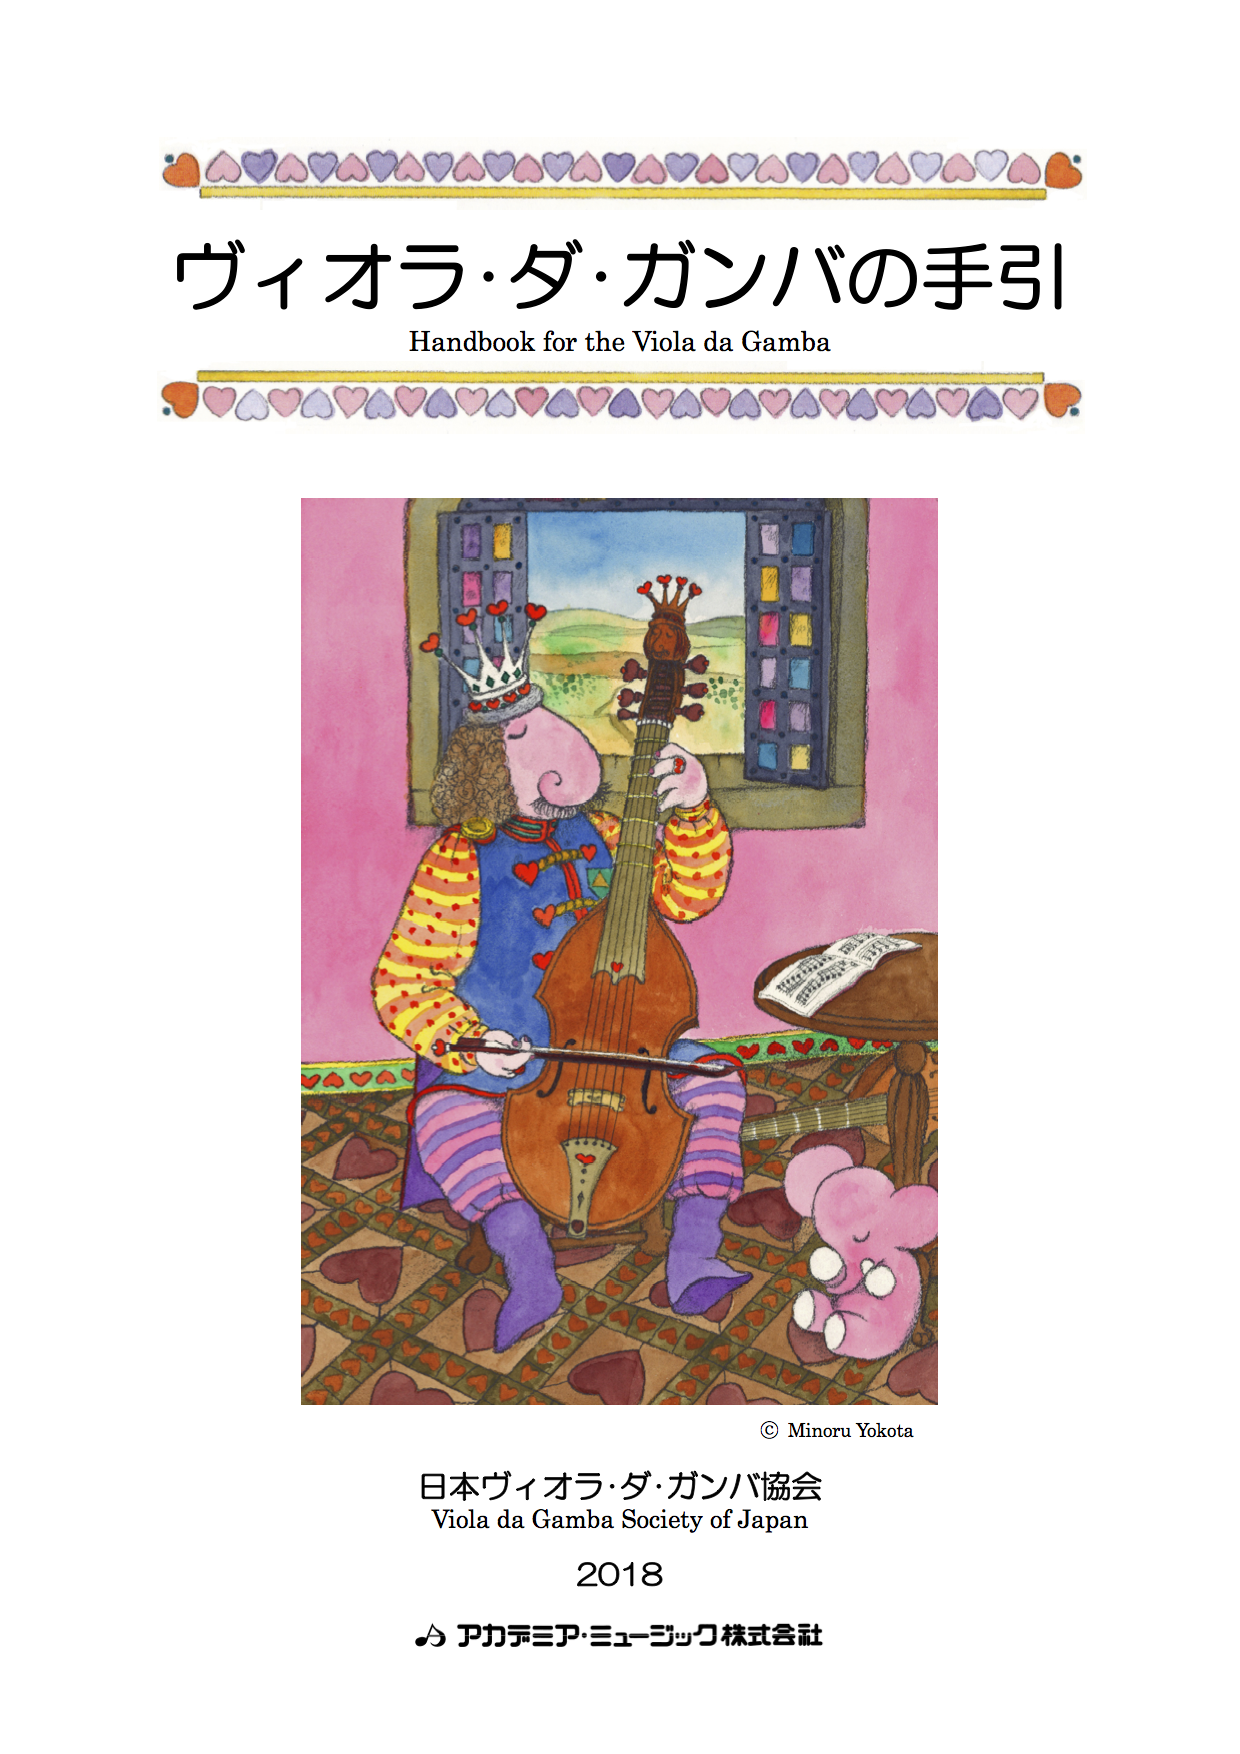 Handbook for the Viola da Gamba, color print